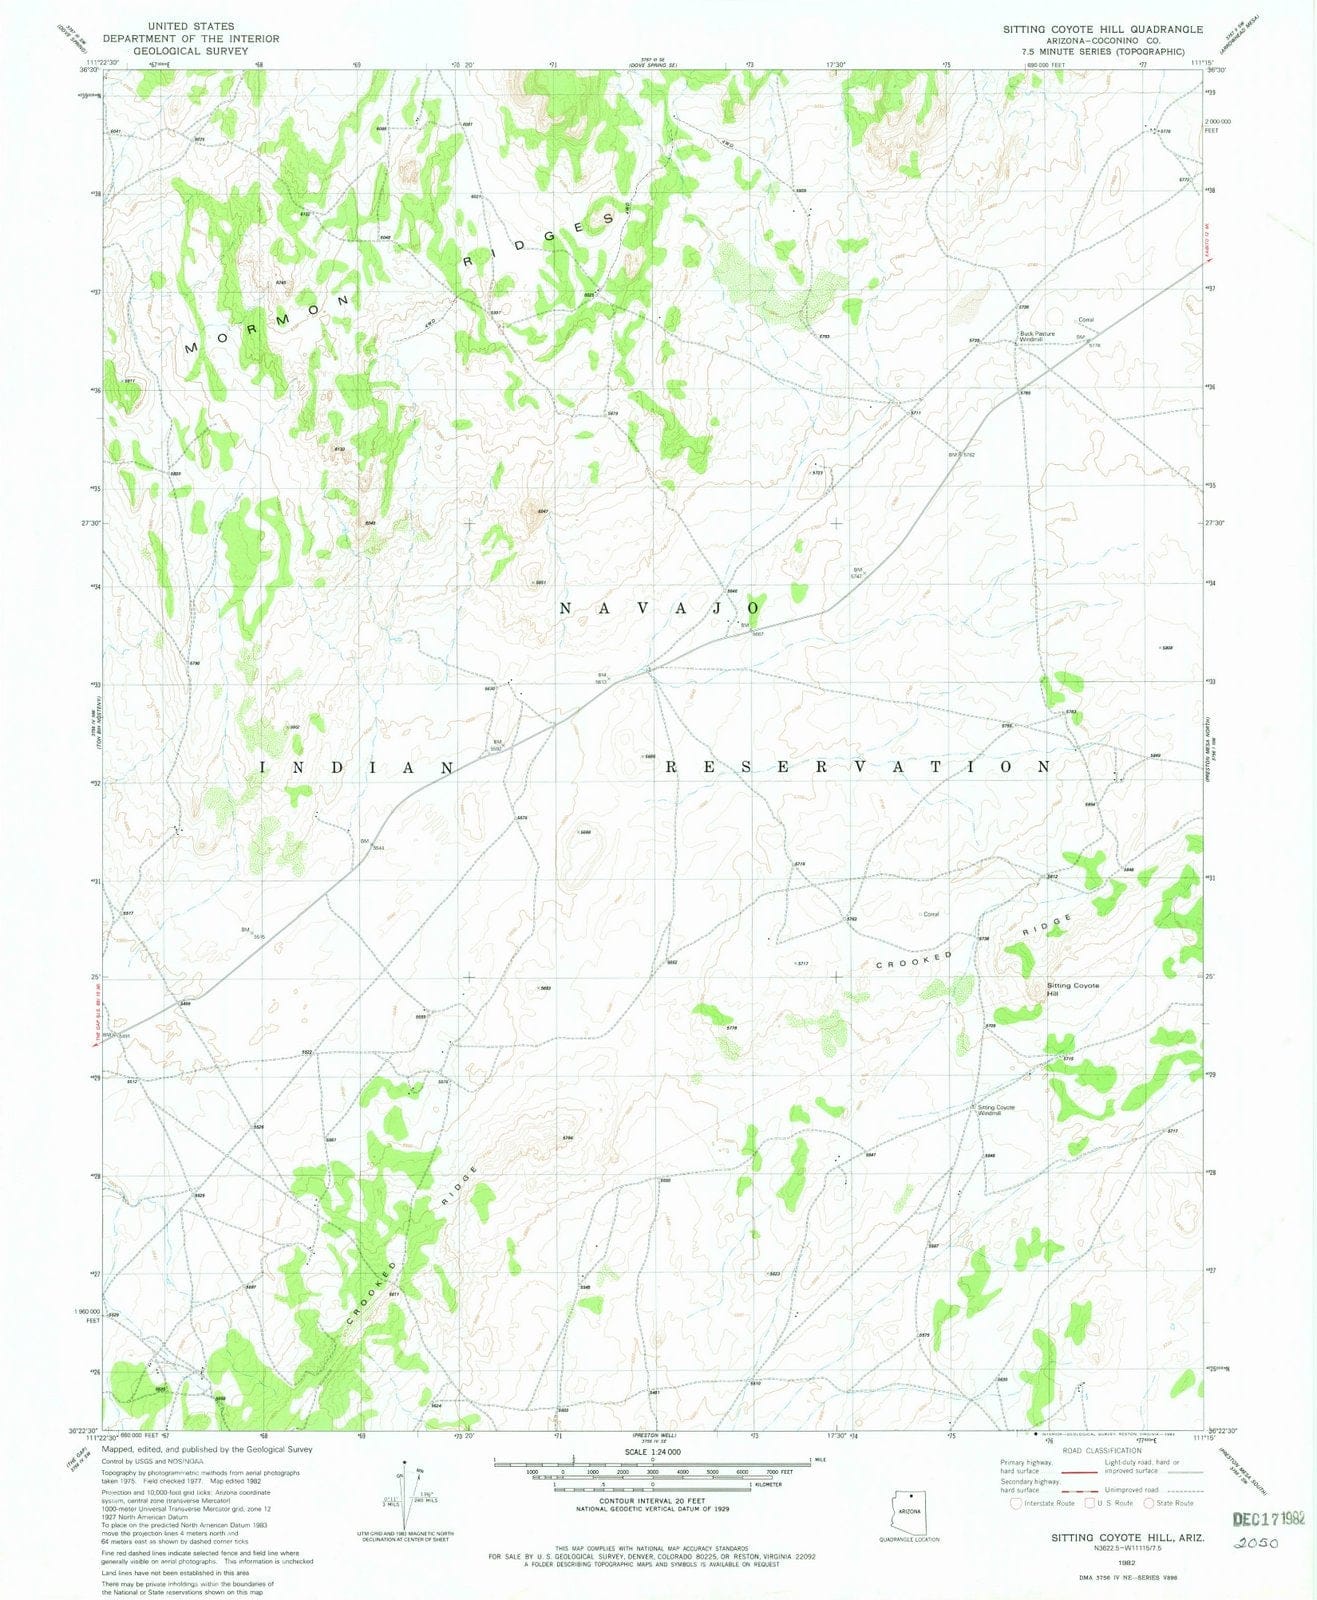 1982 Sitting Coyote Hill, AZ - Arizona - USGS Topographic Map